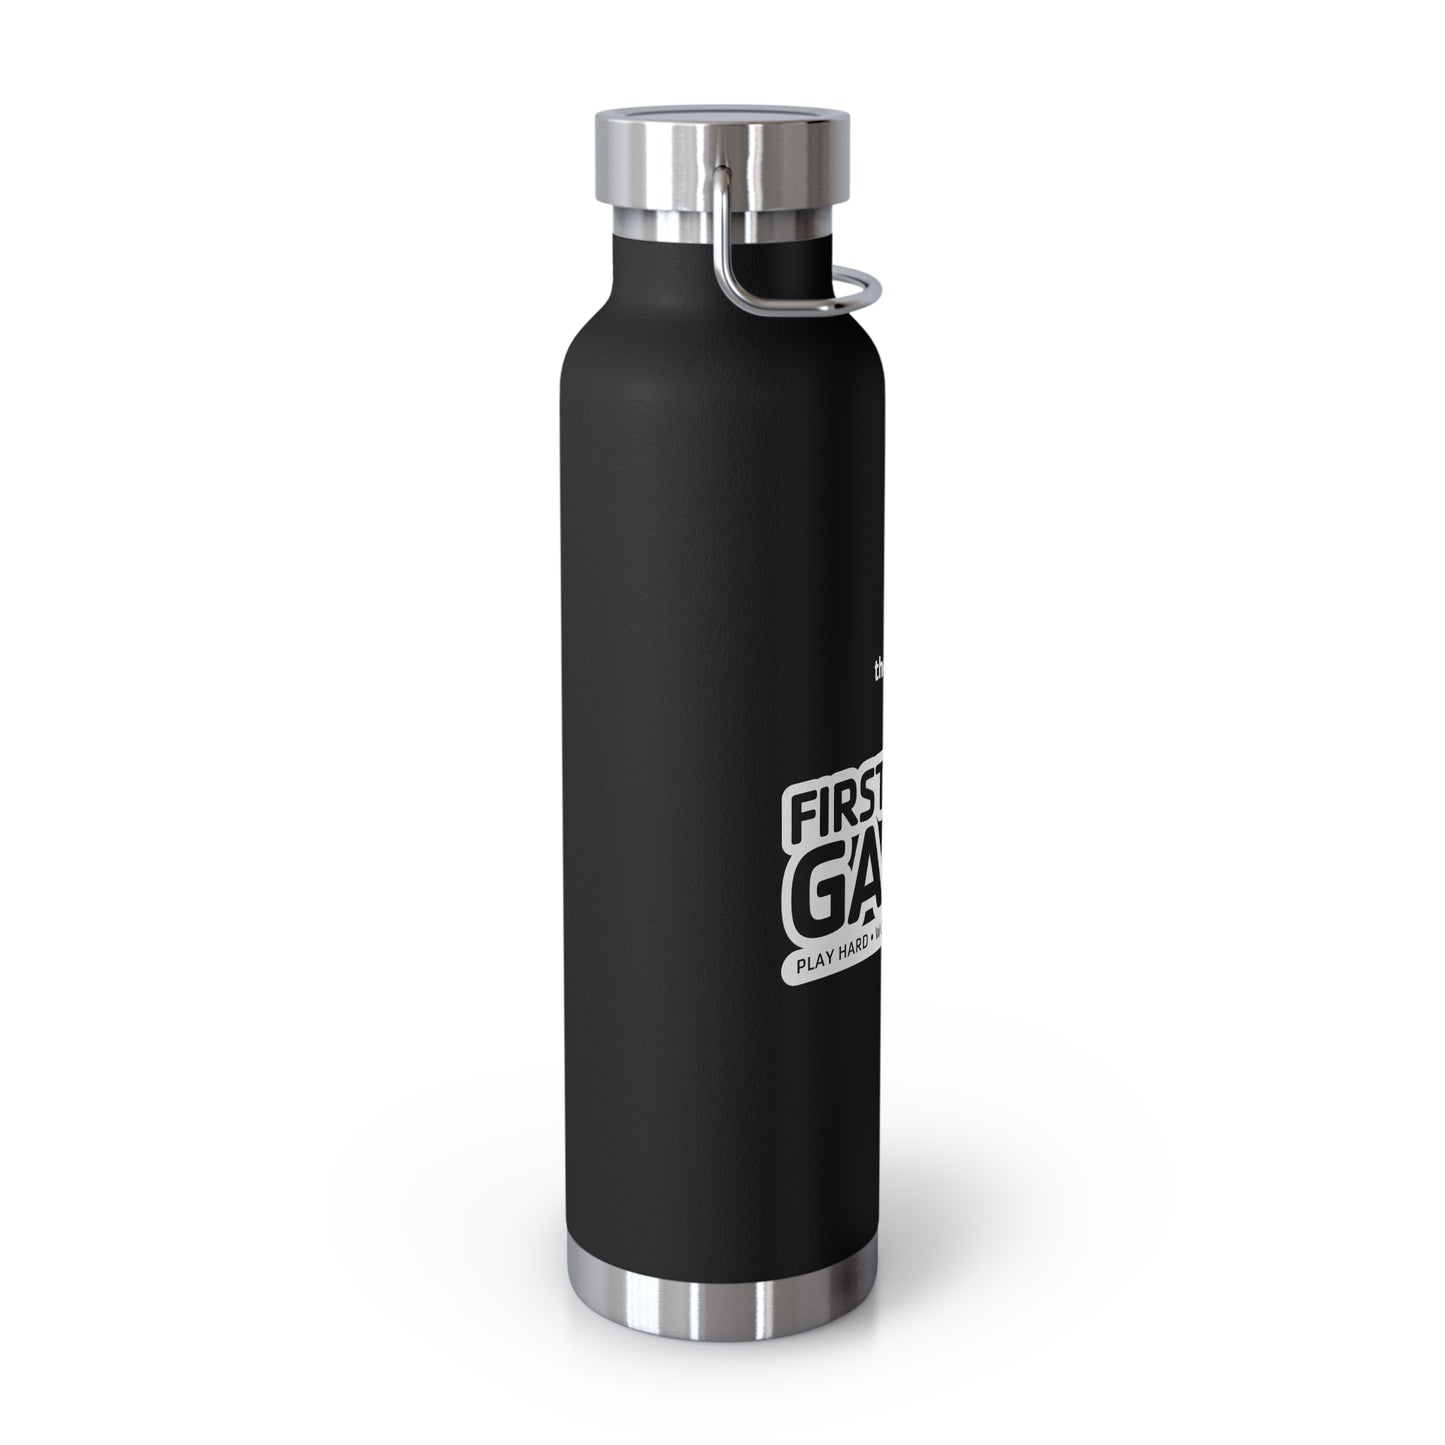 First Coast Games - Copper Vacuum Insulated Bottle, 22oz